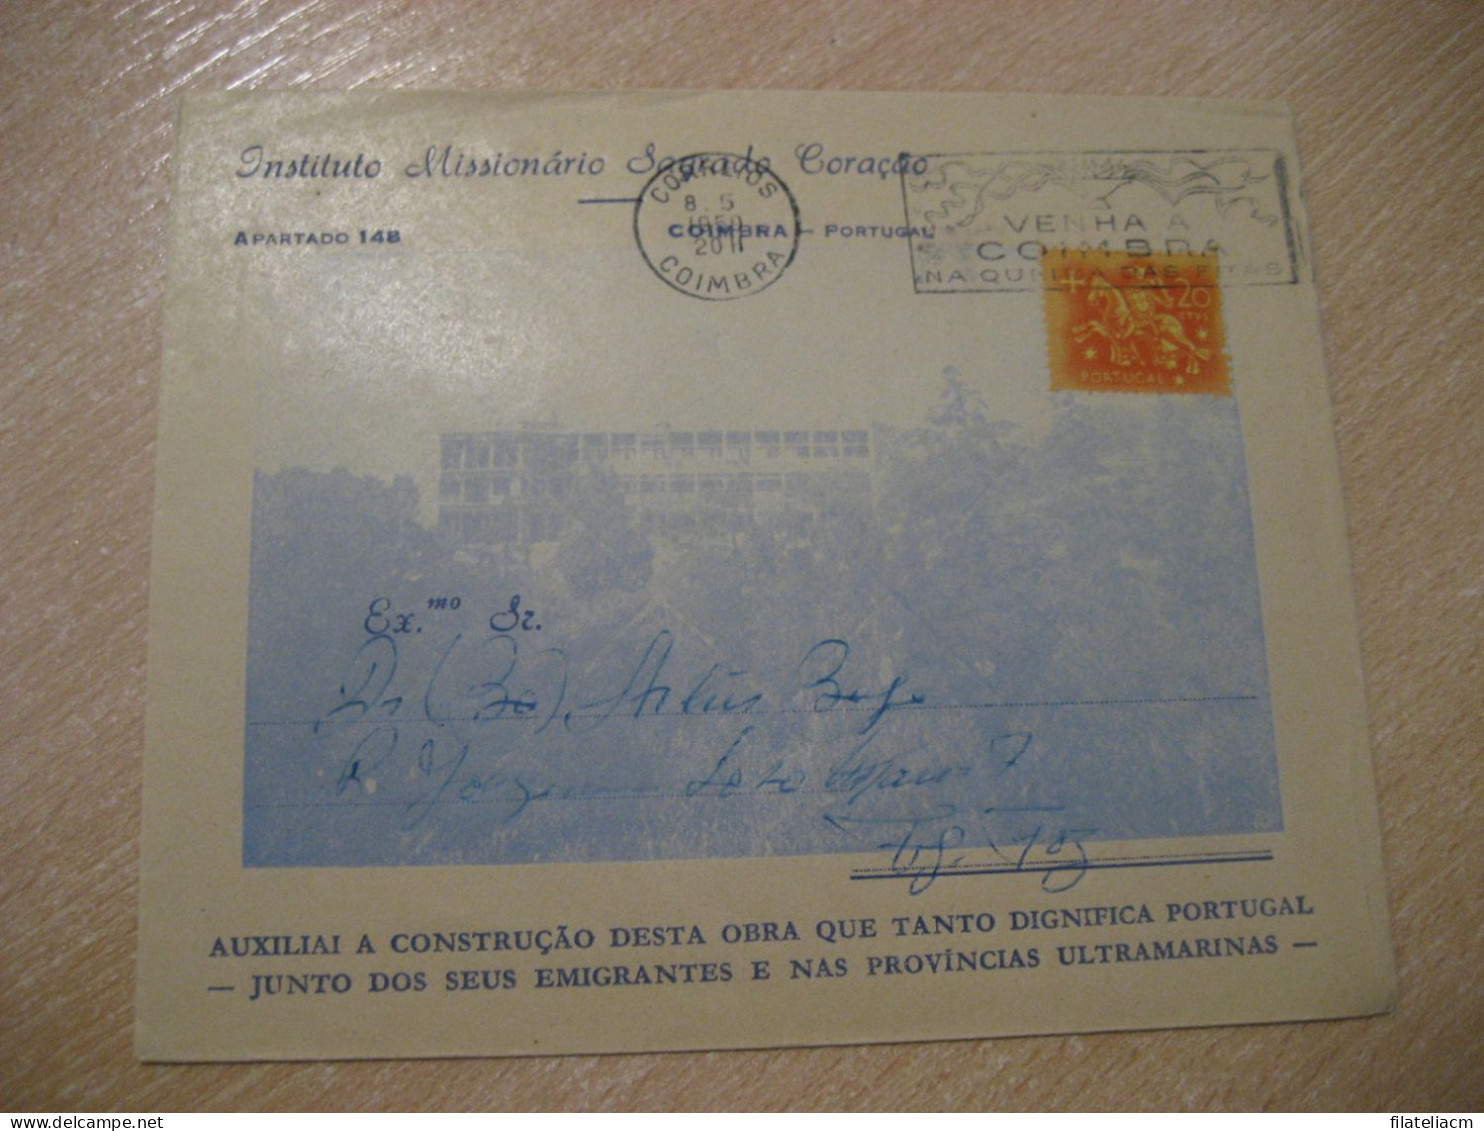 COIMBRA 1959 To Figueira Da Foz Cancel Instituto Missionario Sagrado Coraçao Cover PORTUGAL - Covers & Documents